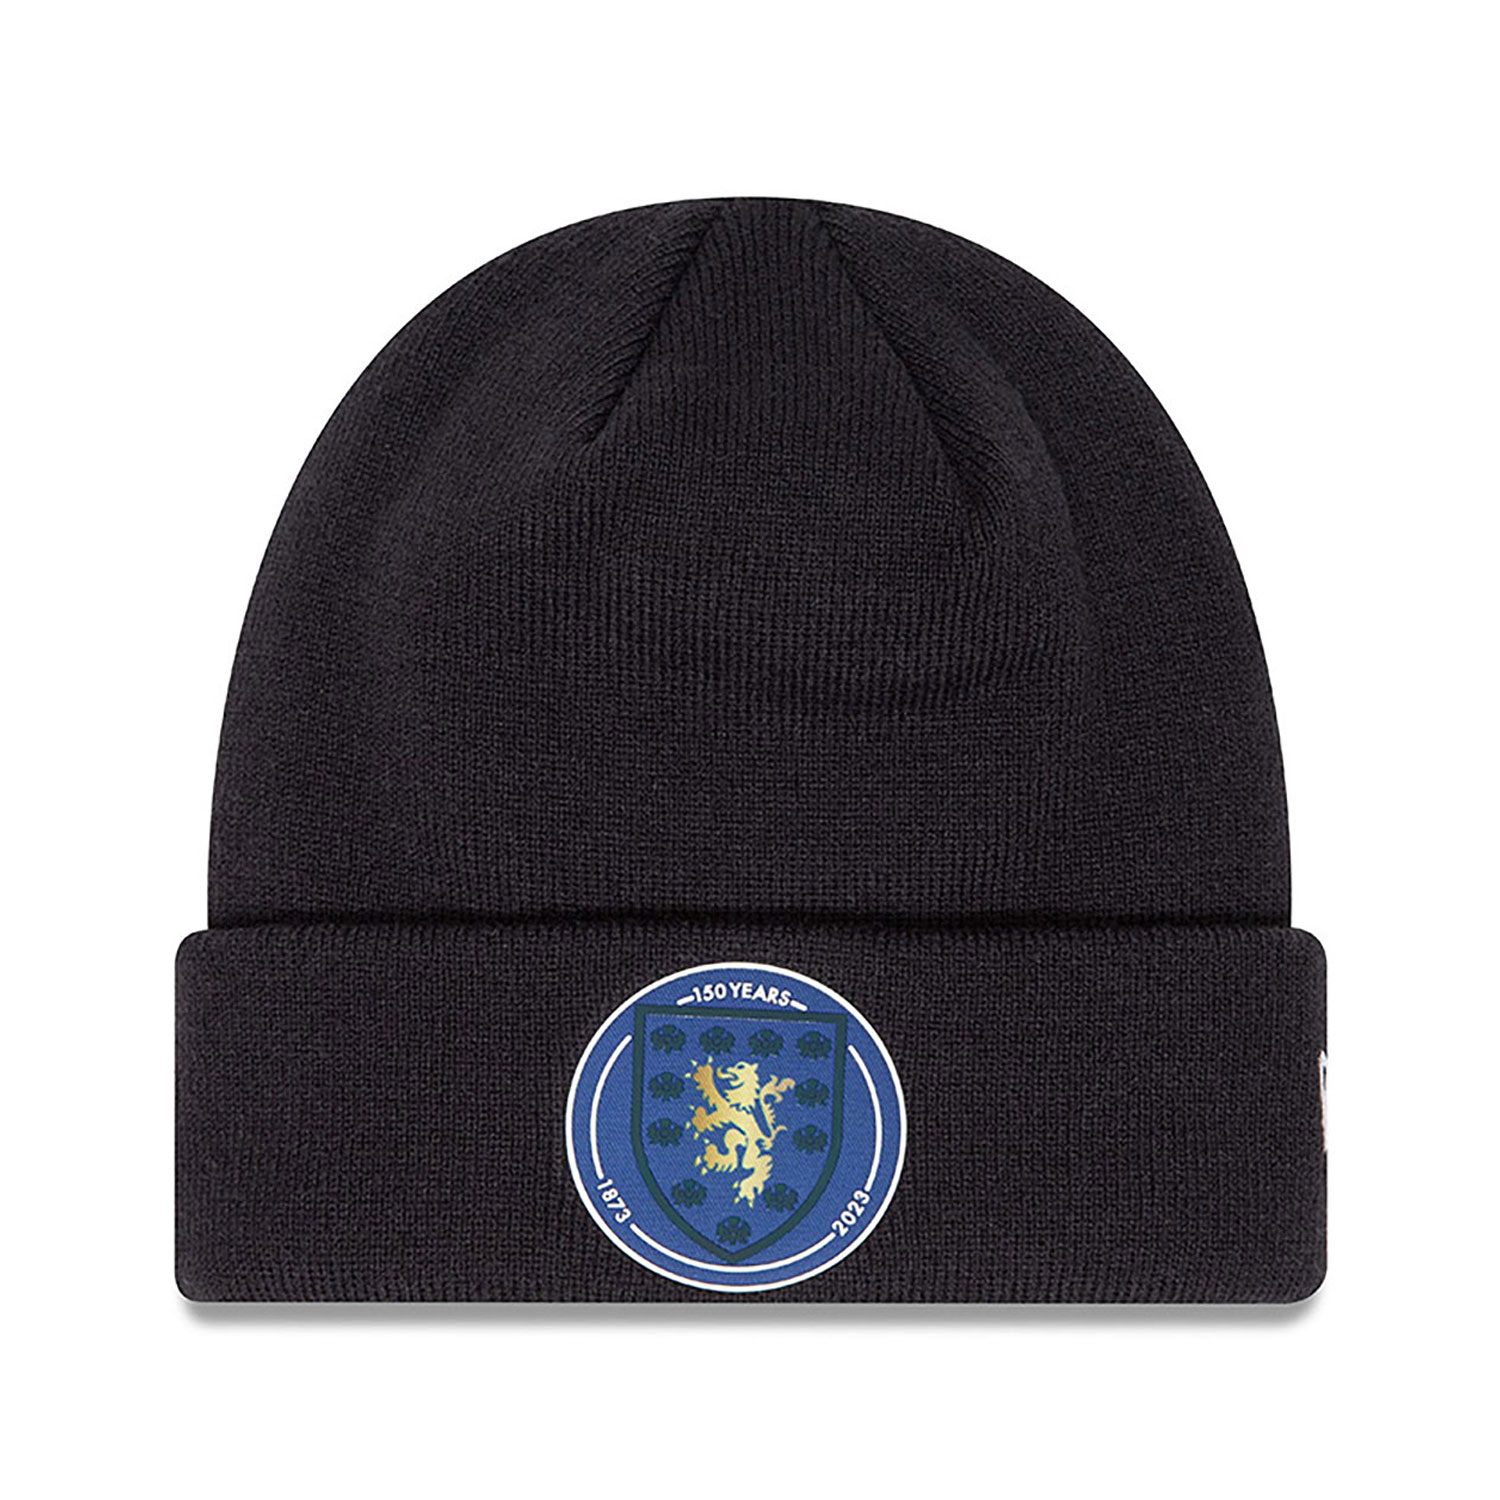 The Scottish Football Association Navy Cuff Knit Beanie Hat